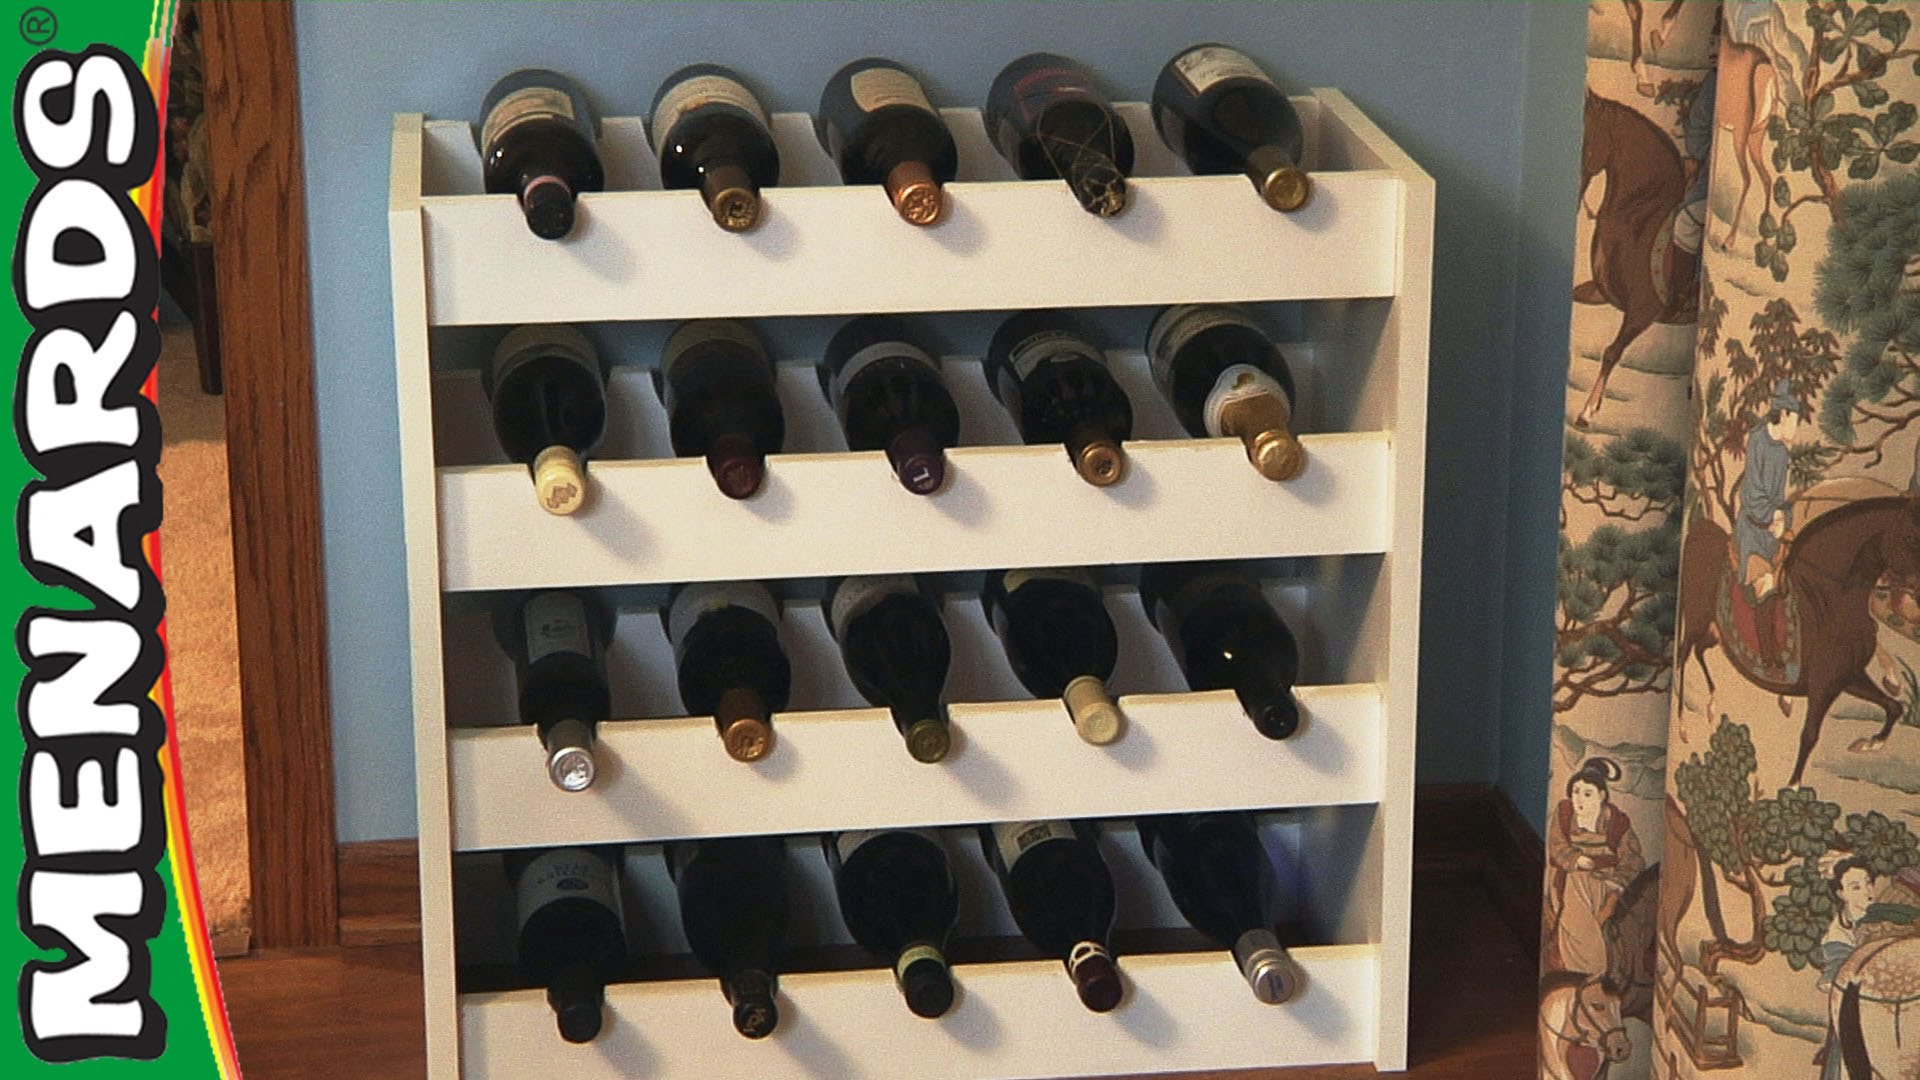 diy wine racks wine rack - how to build - menards - youtube KKYVTLI